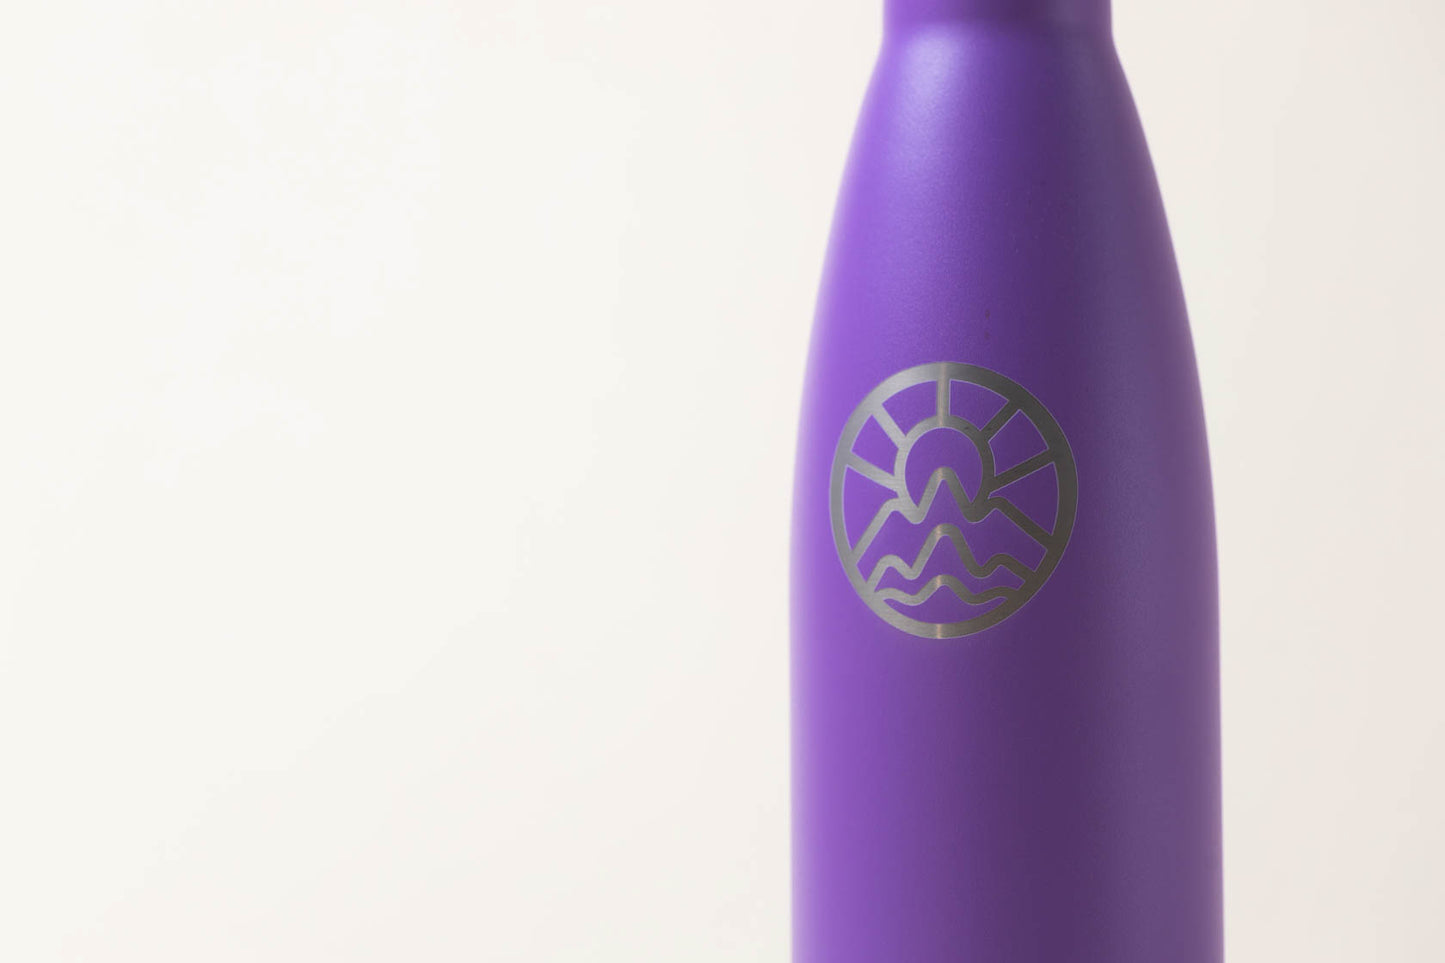 Water Bottle - 16oz McClumsy Steel Insulated - Purple